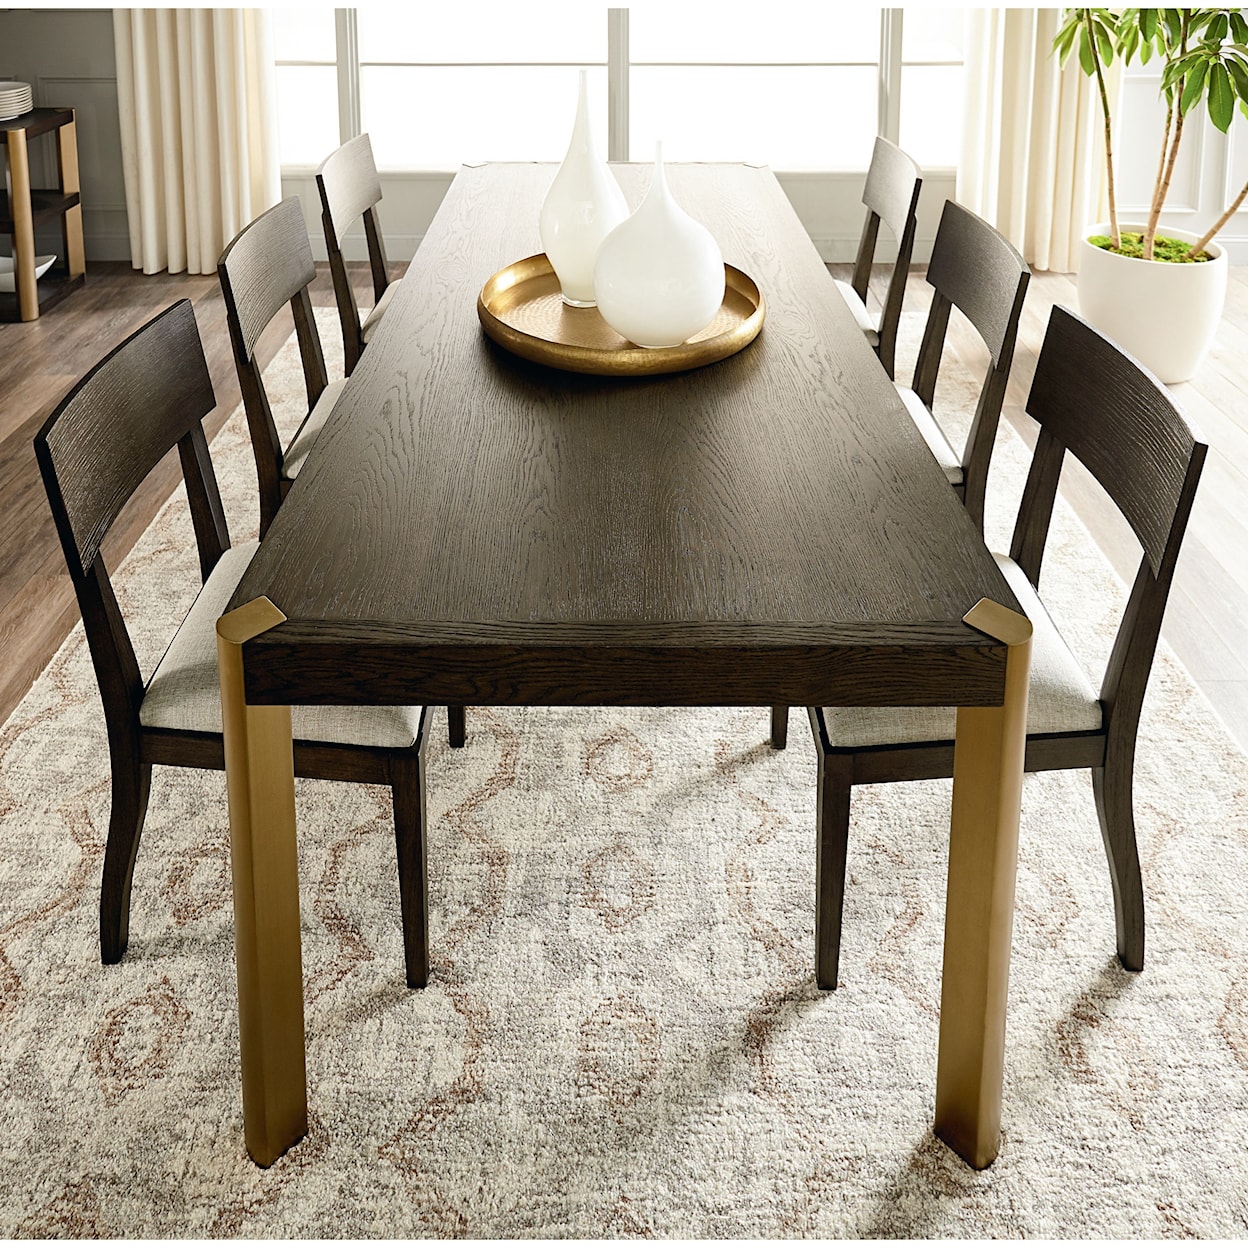 Bassett Modern - Astor and Rivoli 7-Piece Table and Chair Set